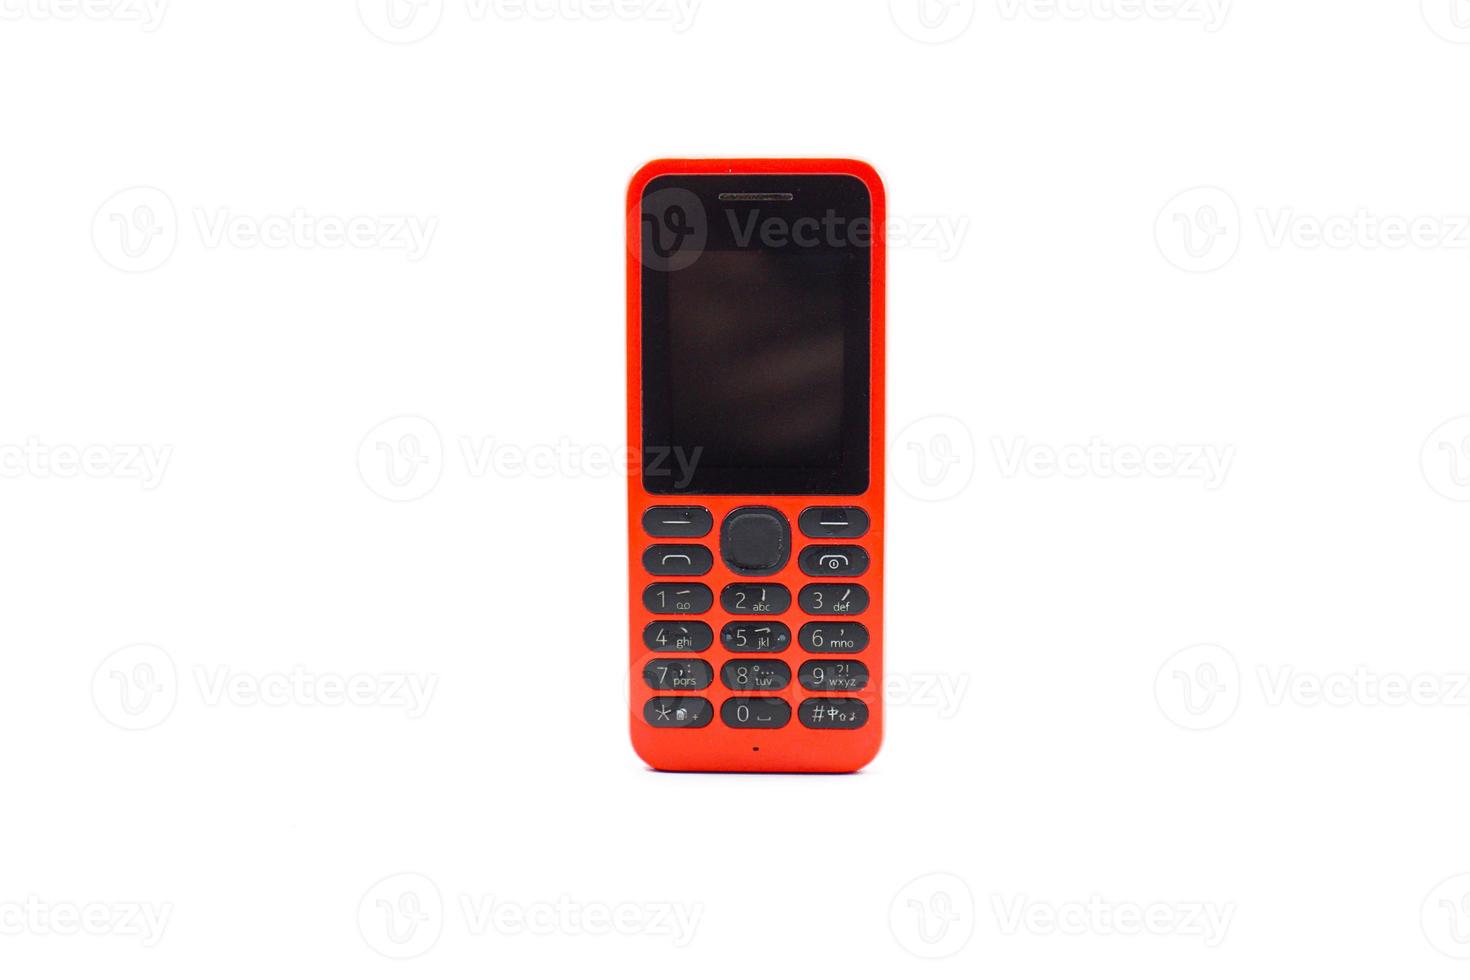 viejo teléfono celular rojo usado solo para llamar y enviar mensajes de texto o sms foto